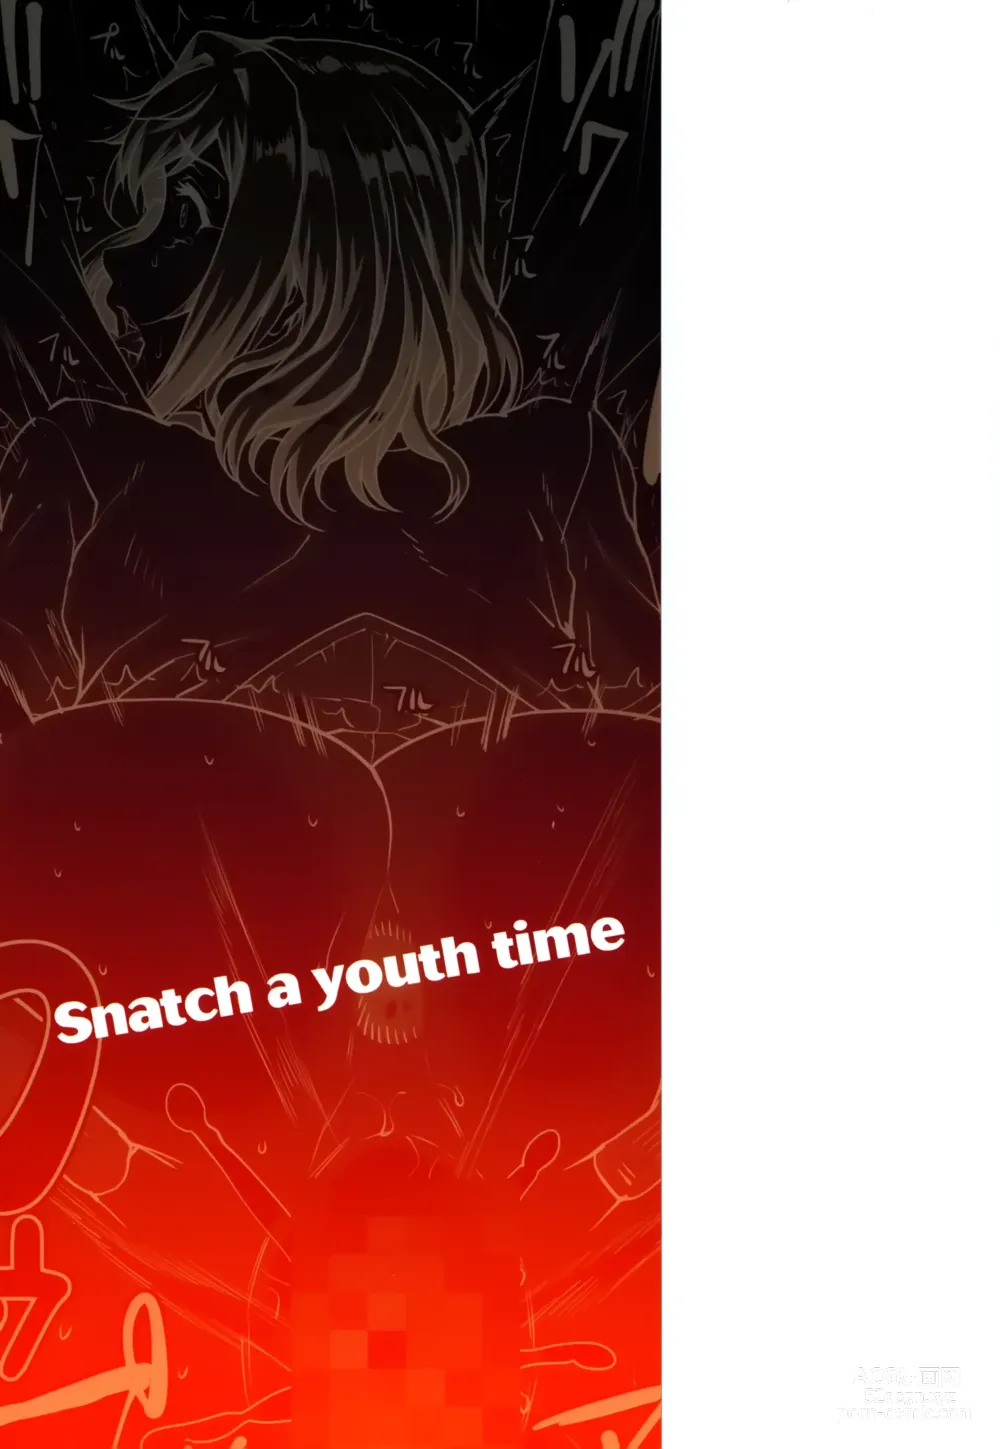 Page 202 of manga Aoharu Snatch - Santch a youth time